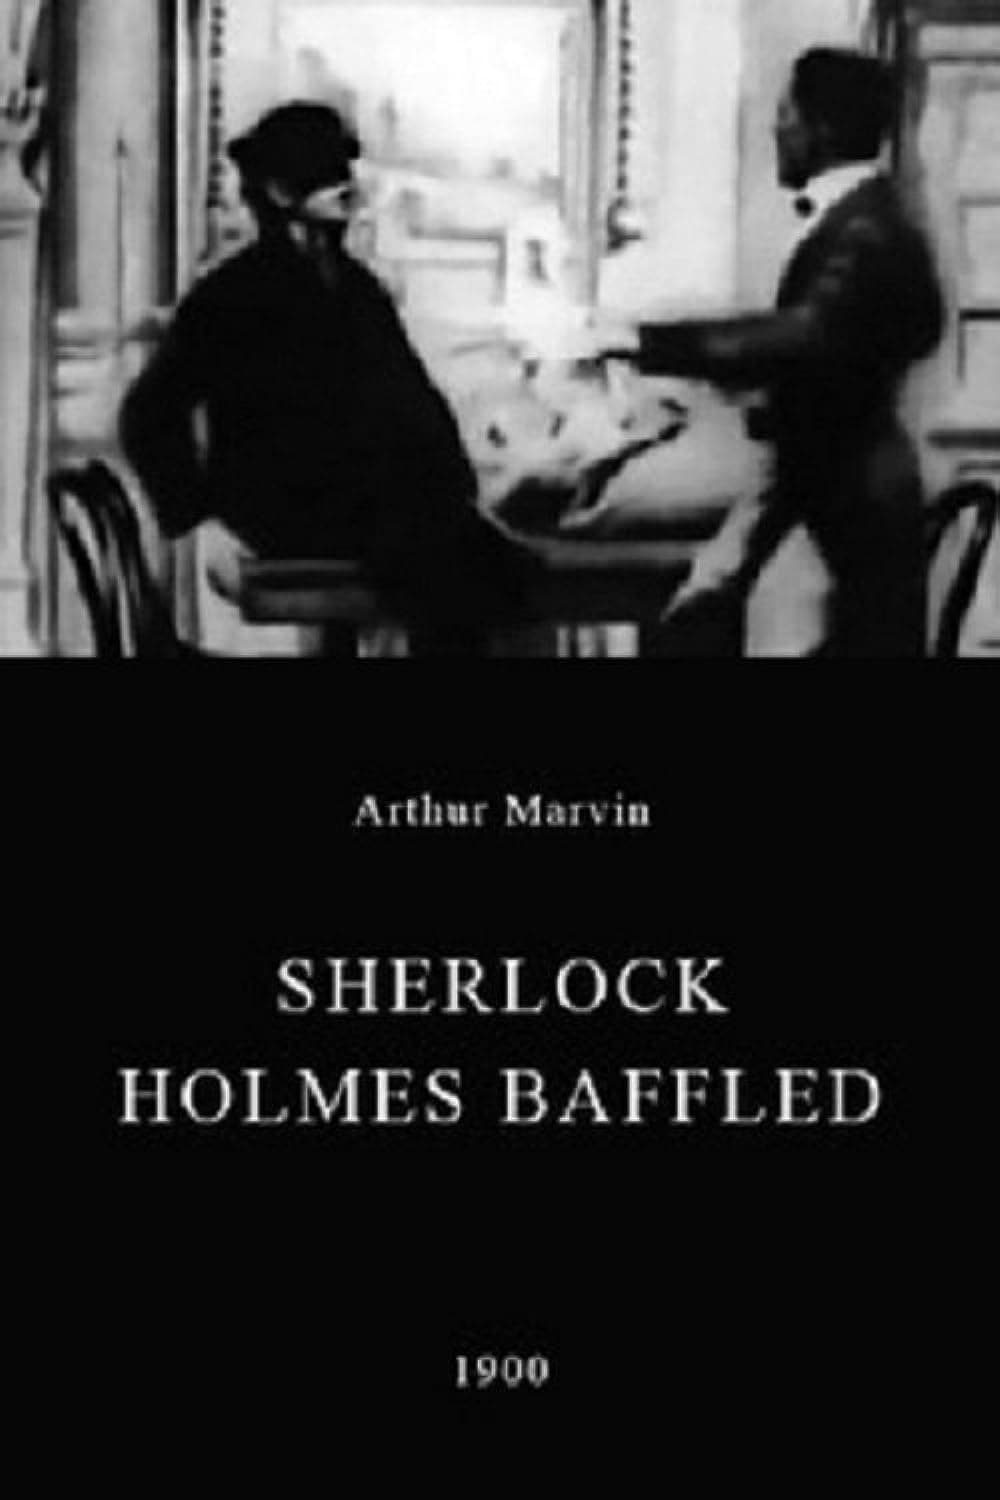 Sherlock Holmes Baffled